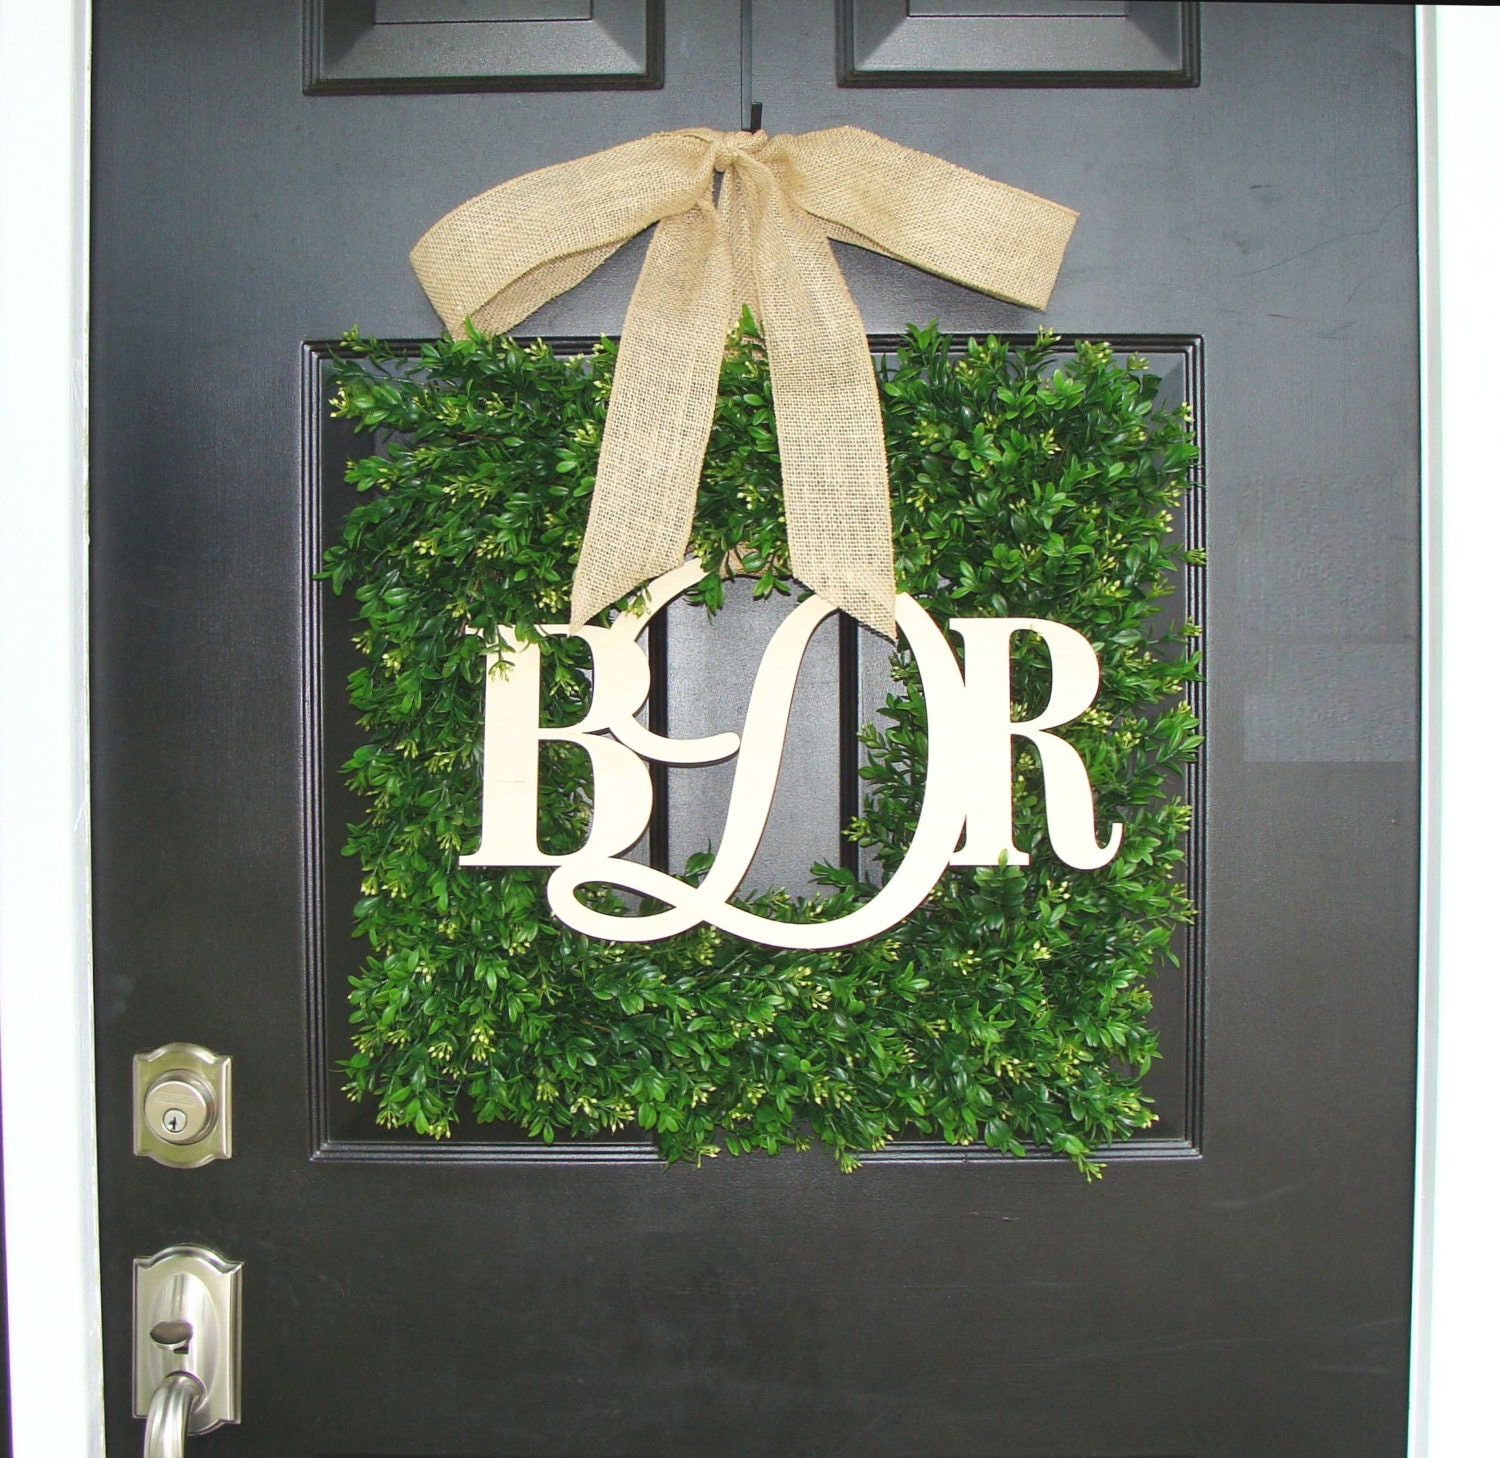 Wedding Gift Ideas For Outdoorsy Couple
 Personalized Wedding Gift Monogram Home Decor by ElegantWreath